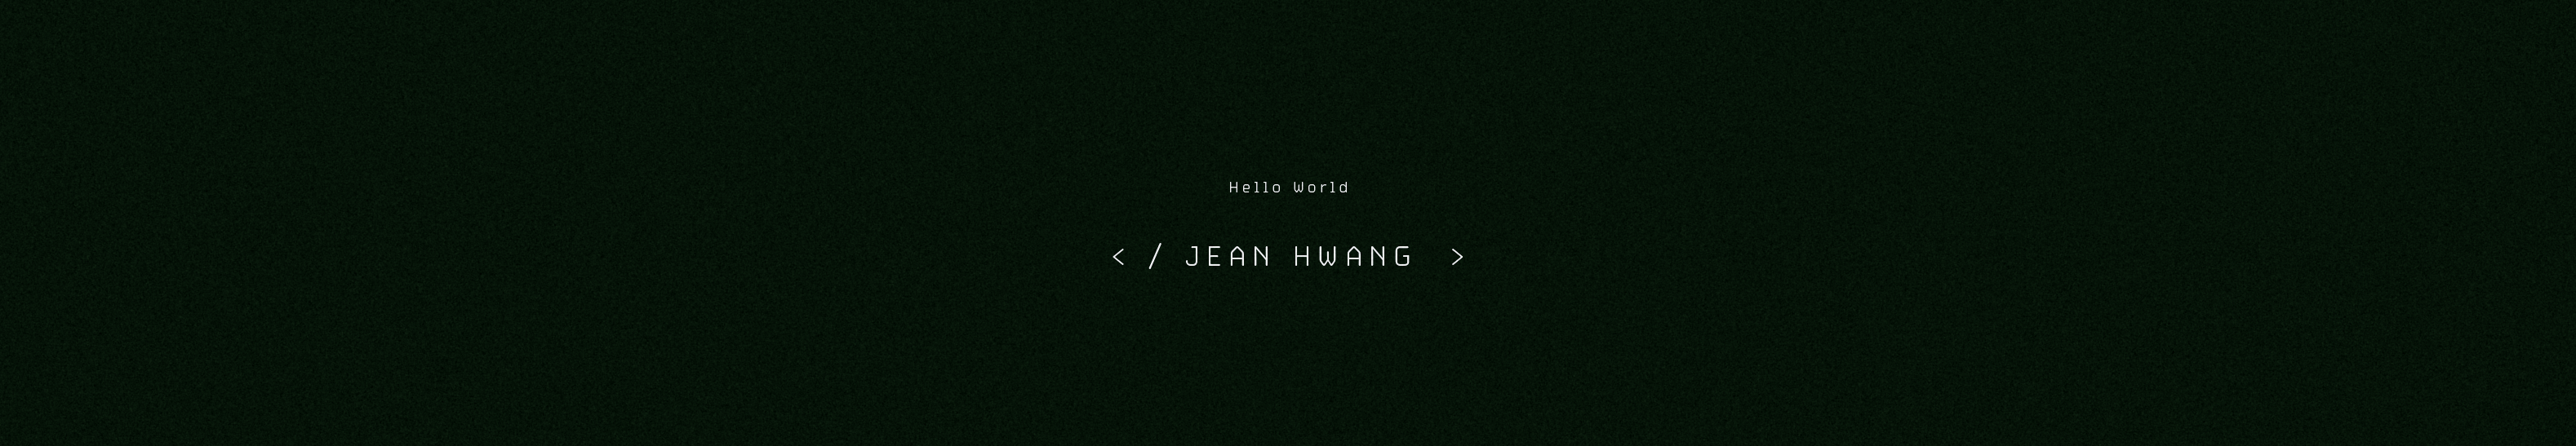 Jean Hwang's profile banner